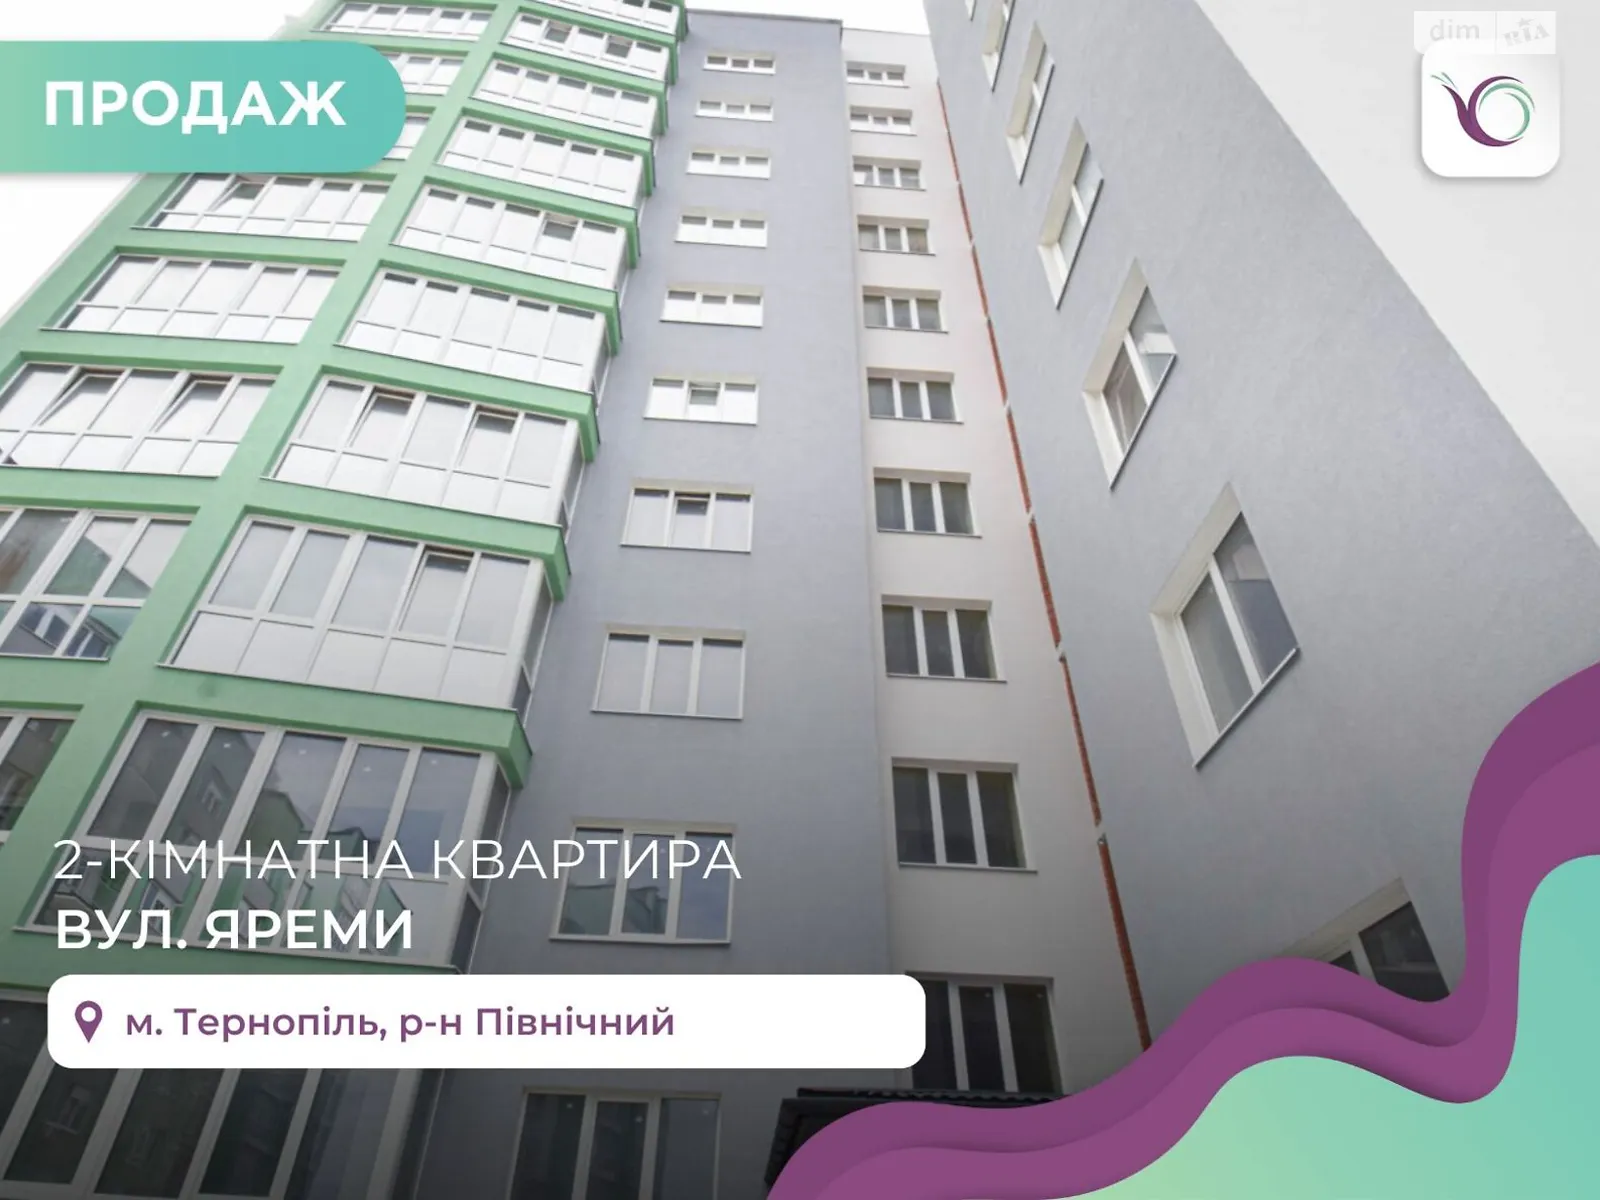 2-кімнатна квартира 74.2 кв. м у Тернополі, цена: 43500 $ - фото 1